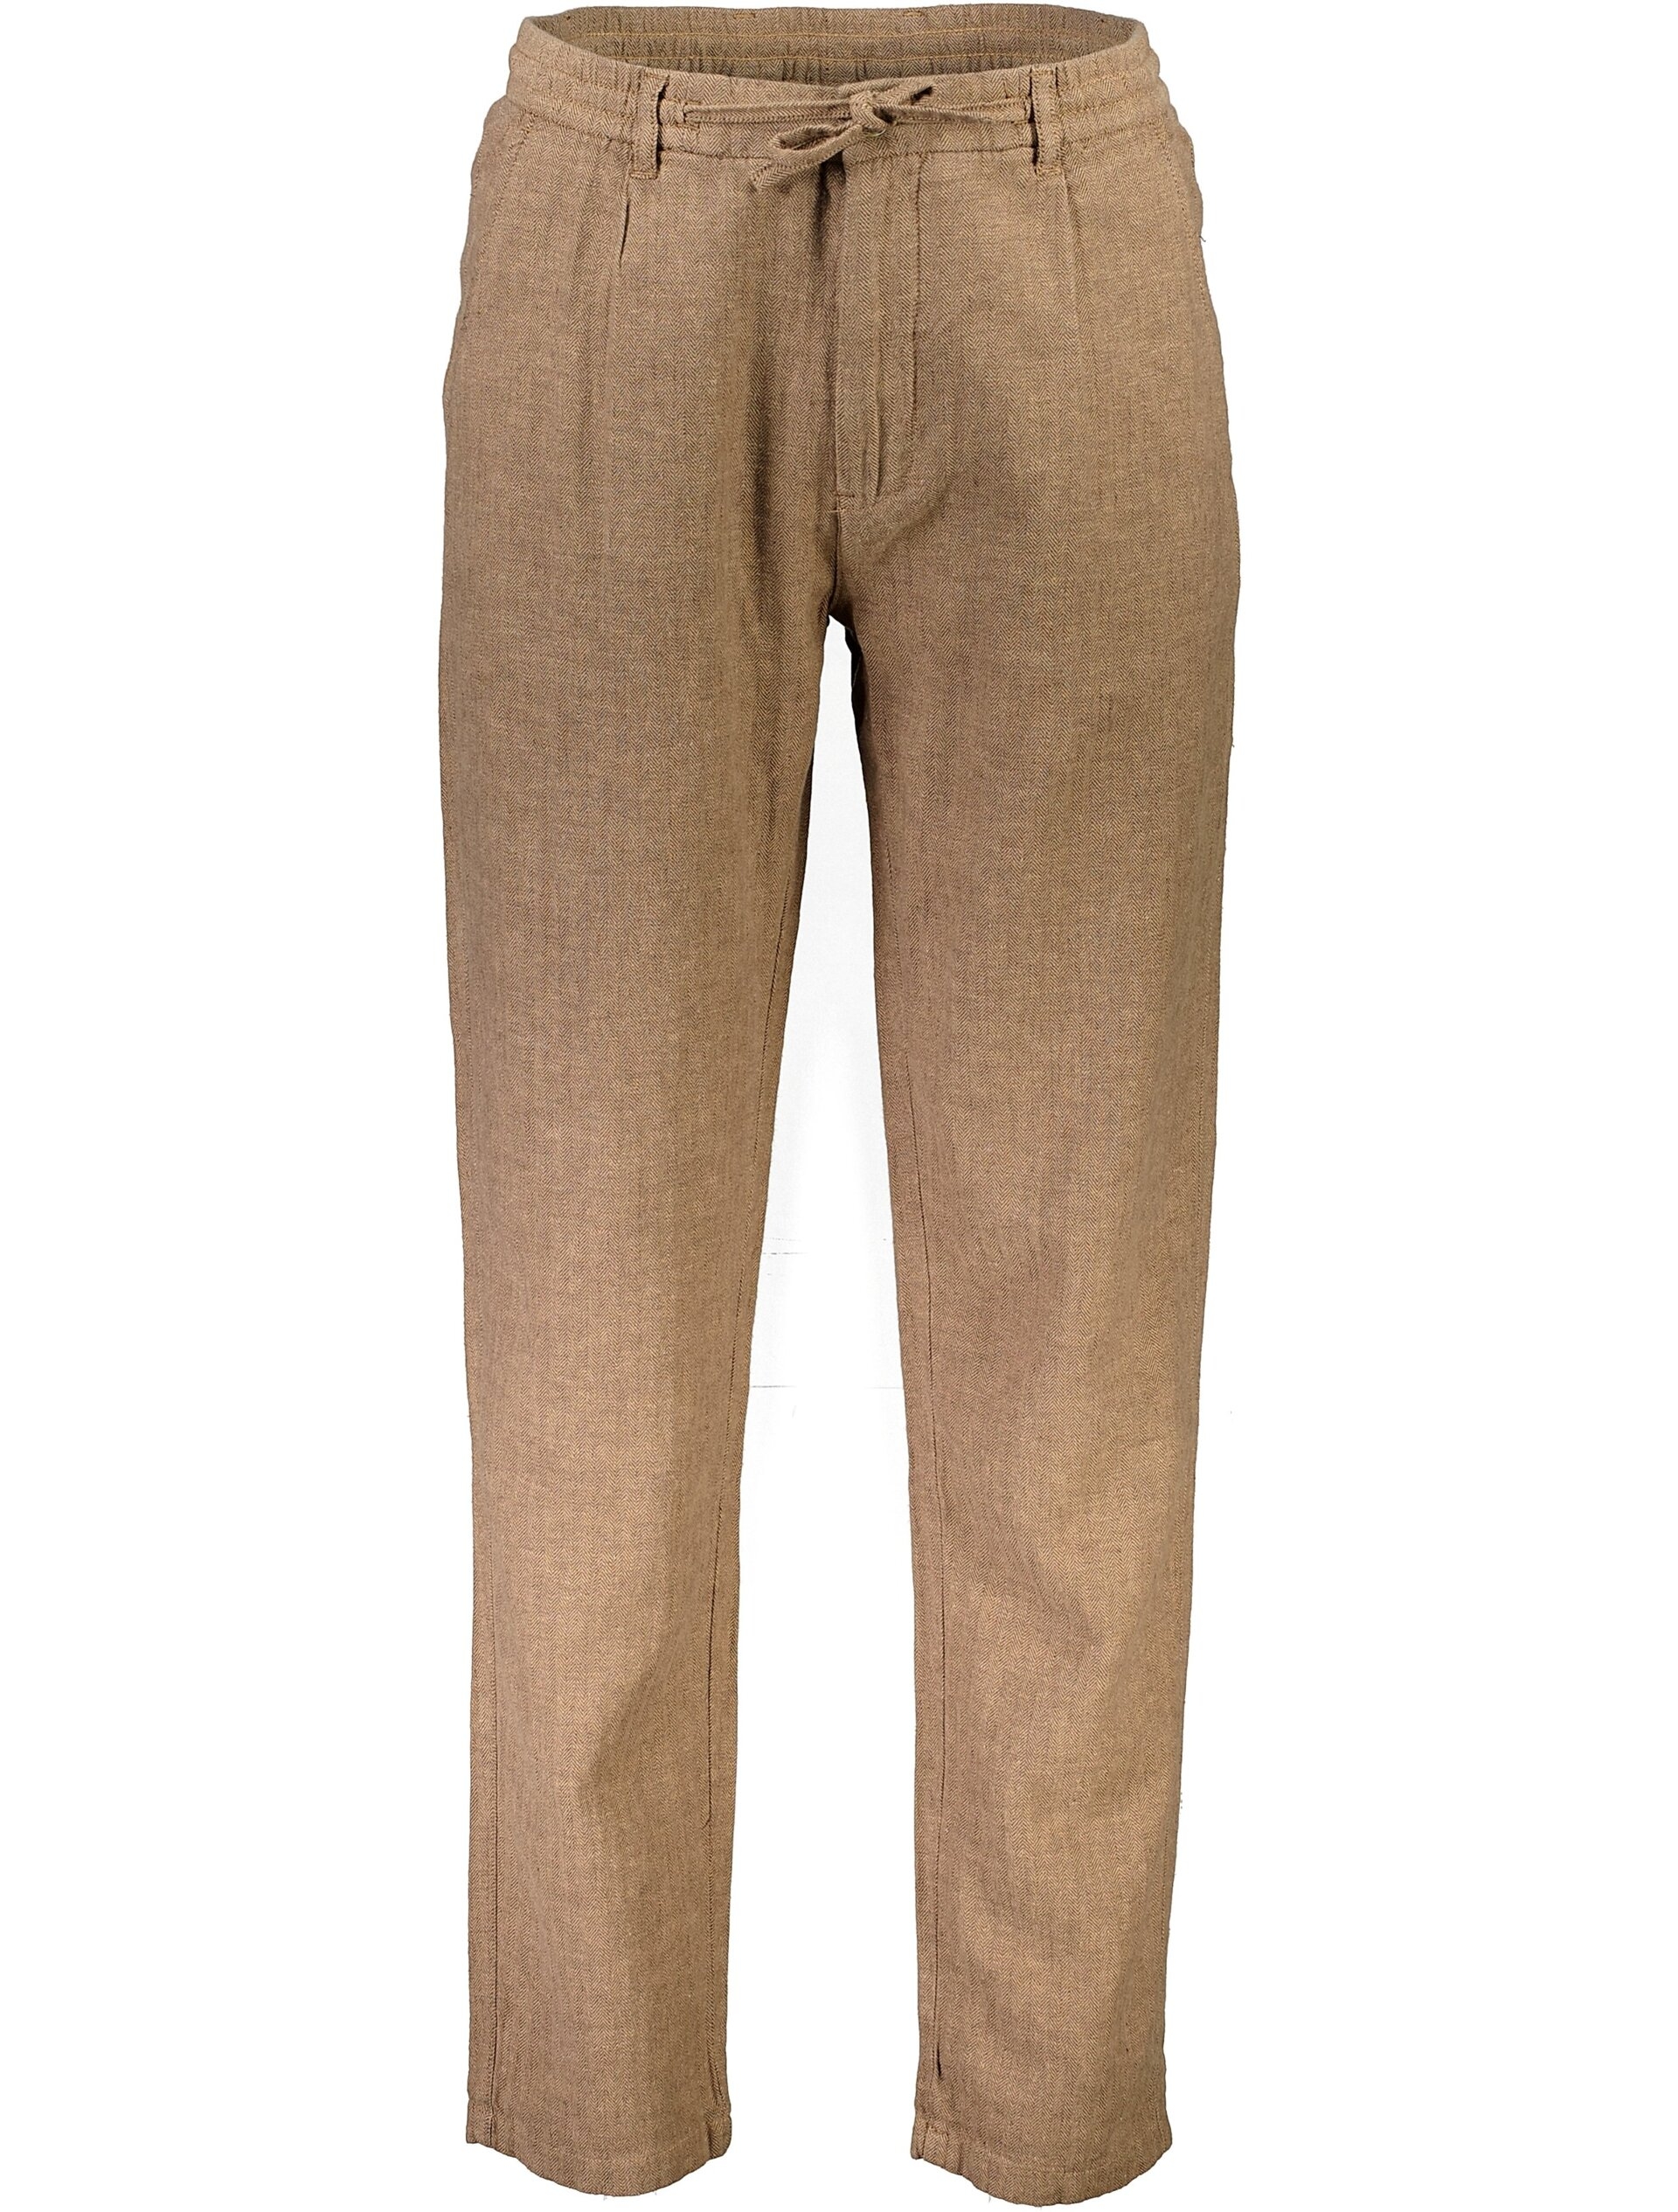 Lindbergh Linen pants grey / dk stone